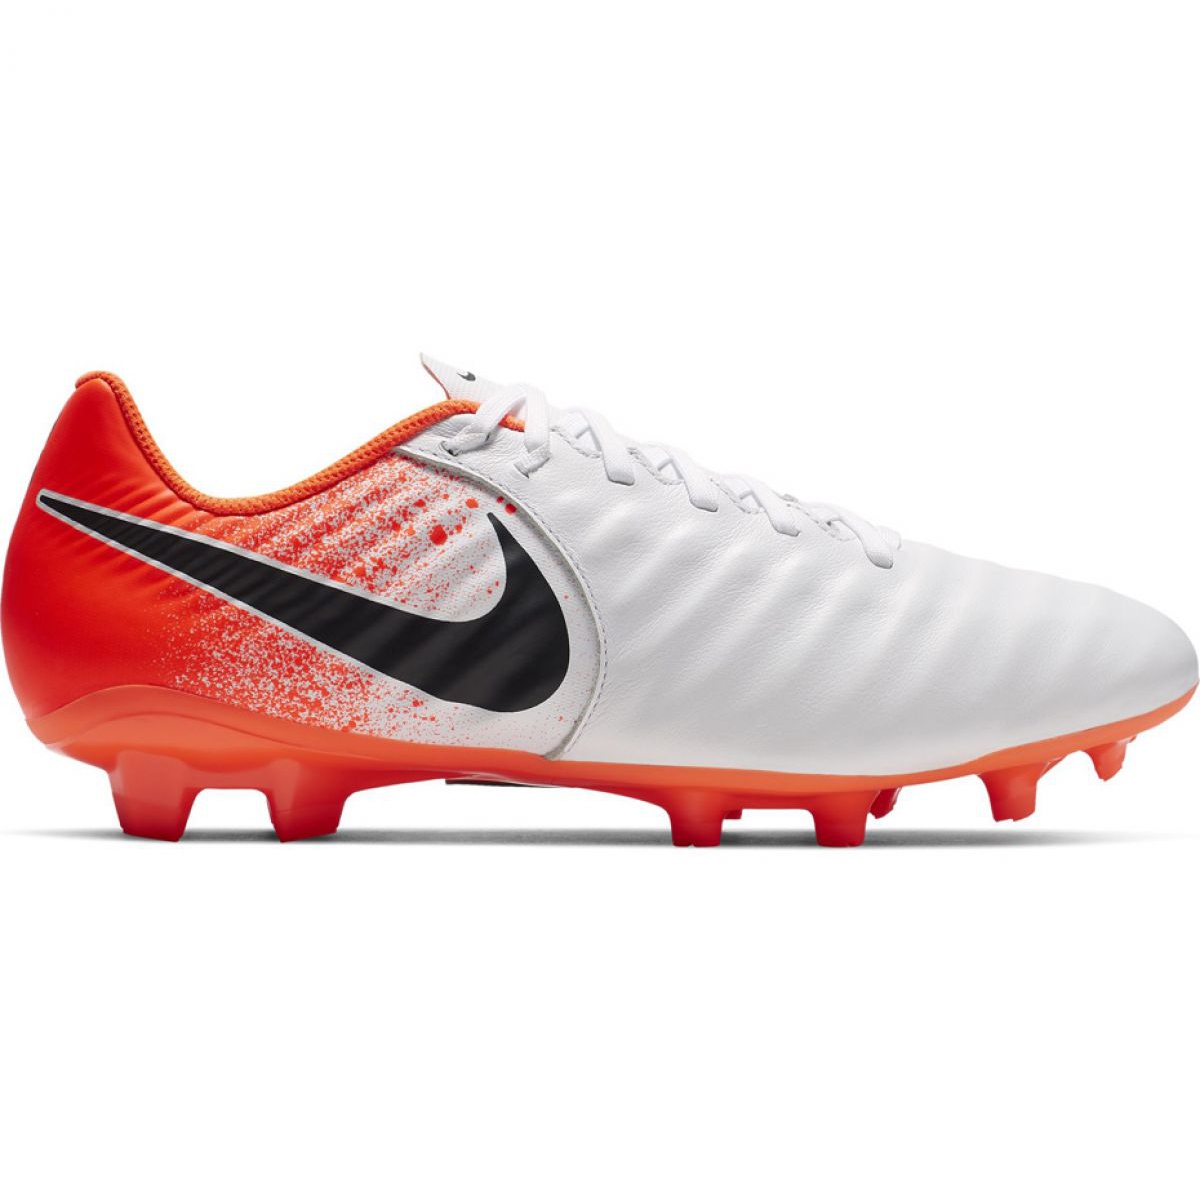 Nike Tiempo Legend 7 Academy Fg M AH7242-118 football shoes white -